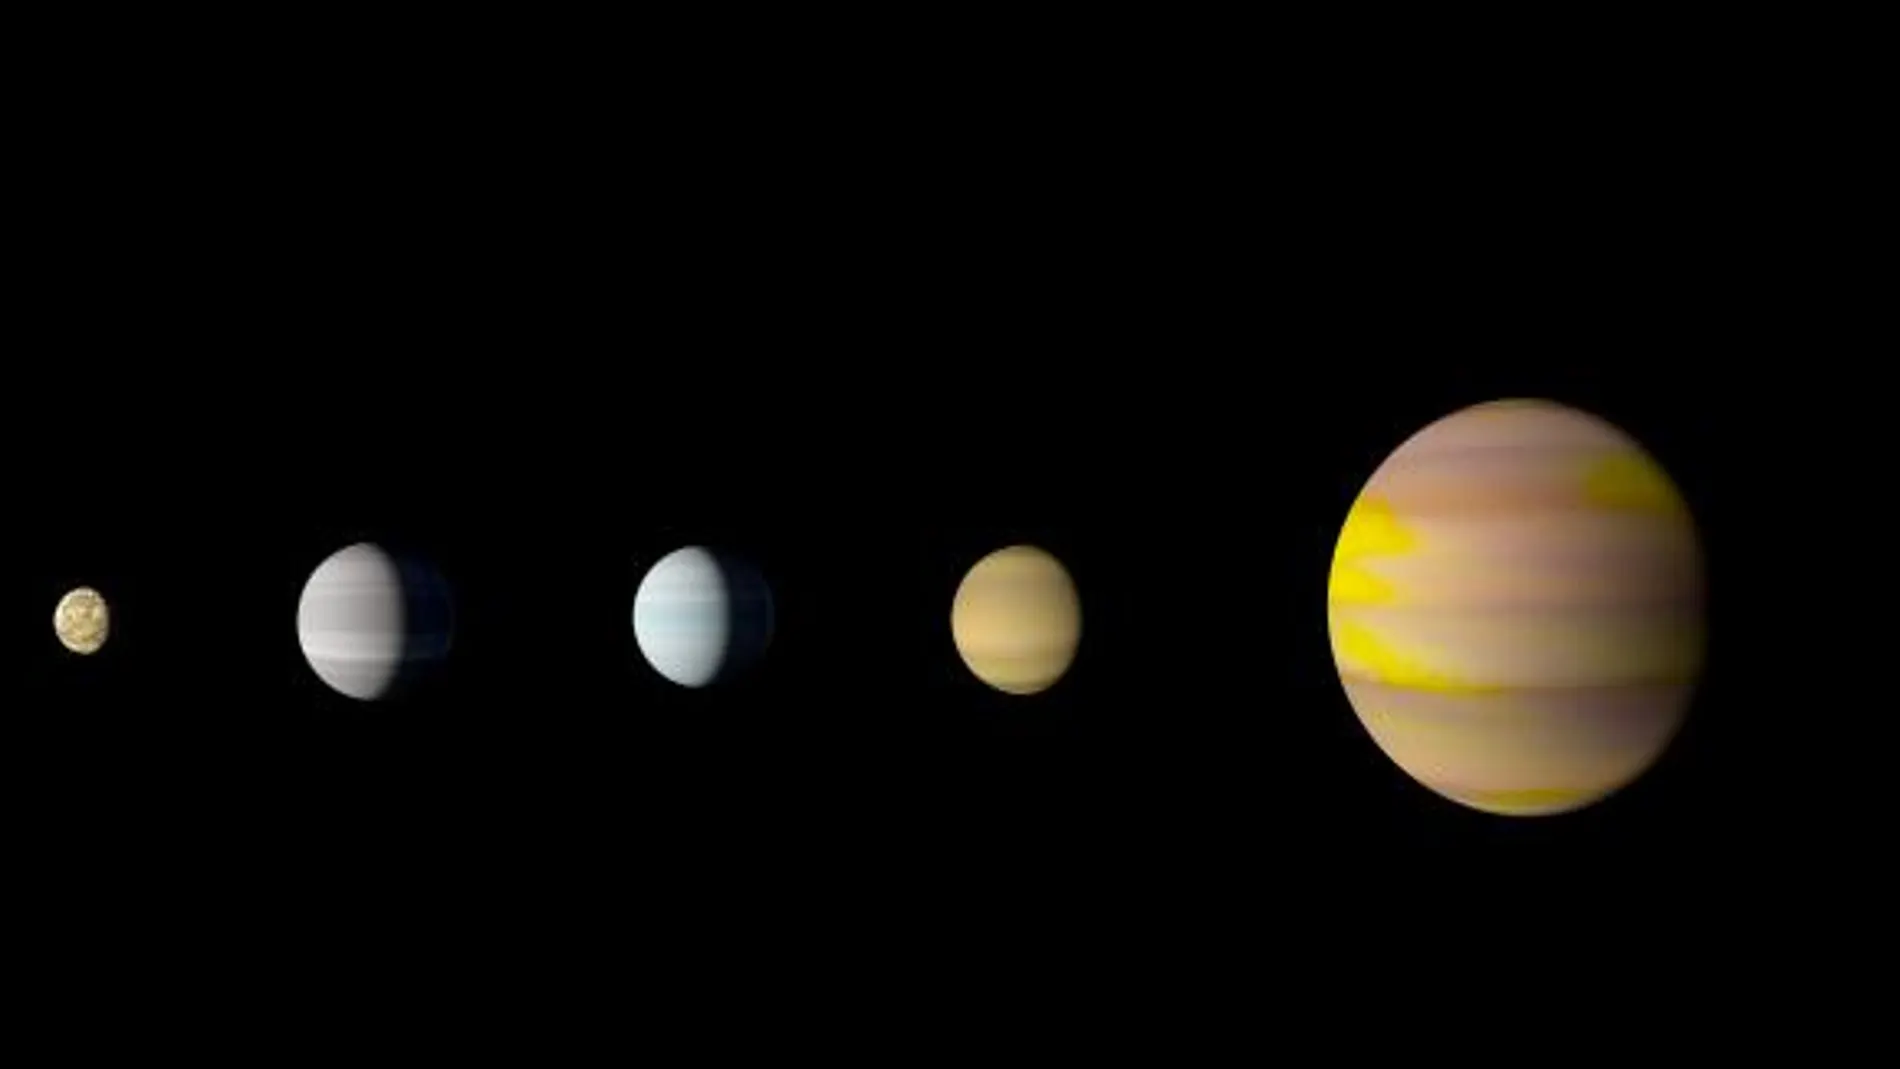 El sistema Kepler-90 tiene 8 planetas